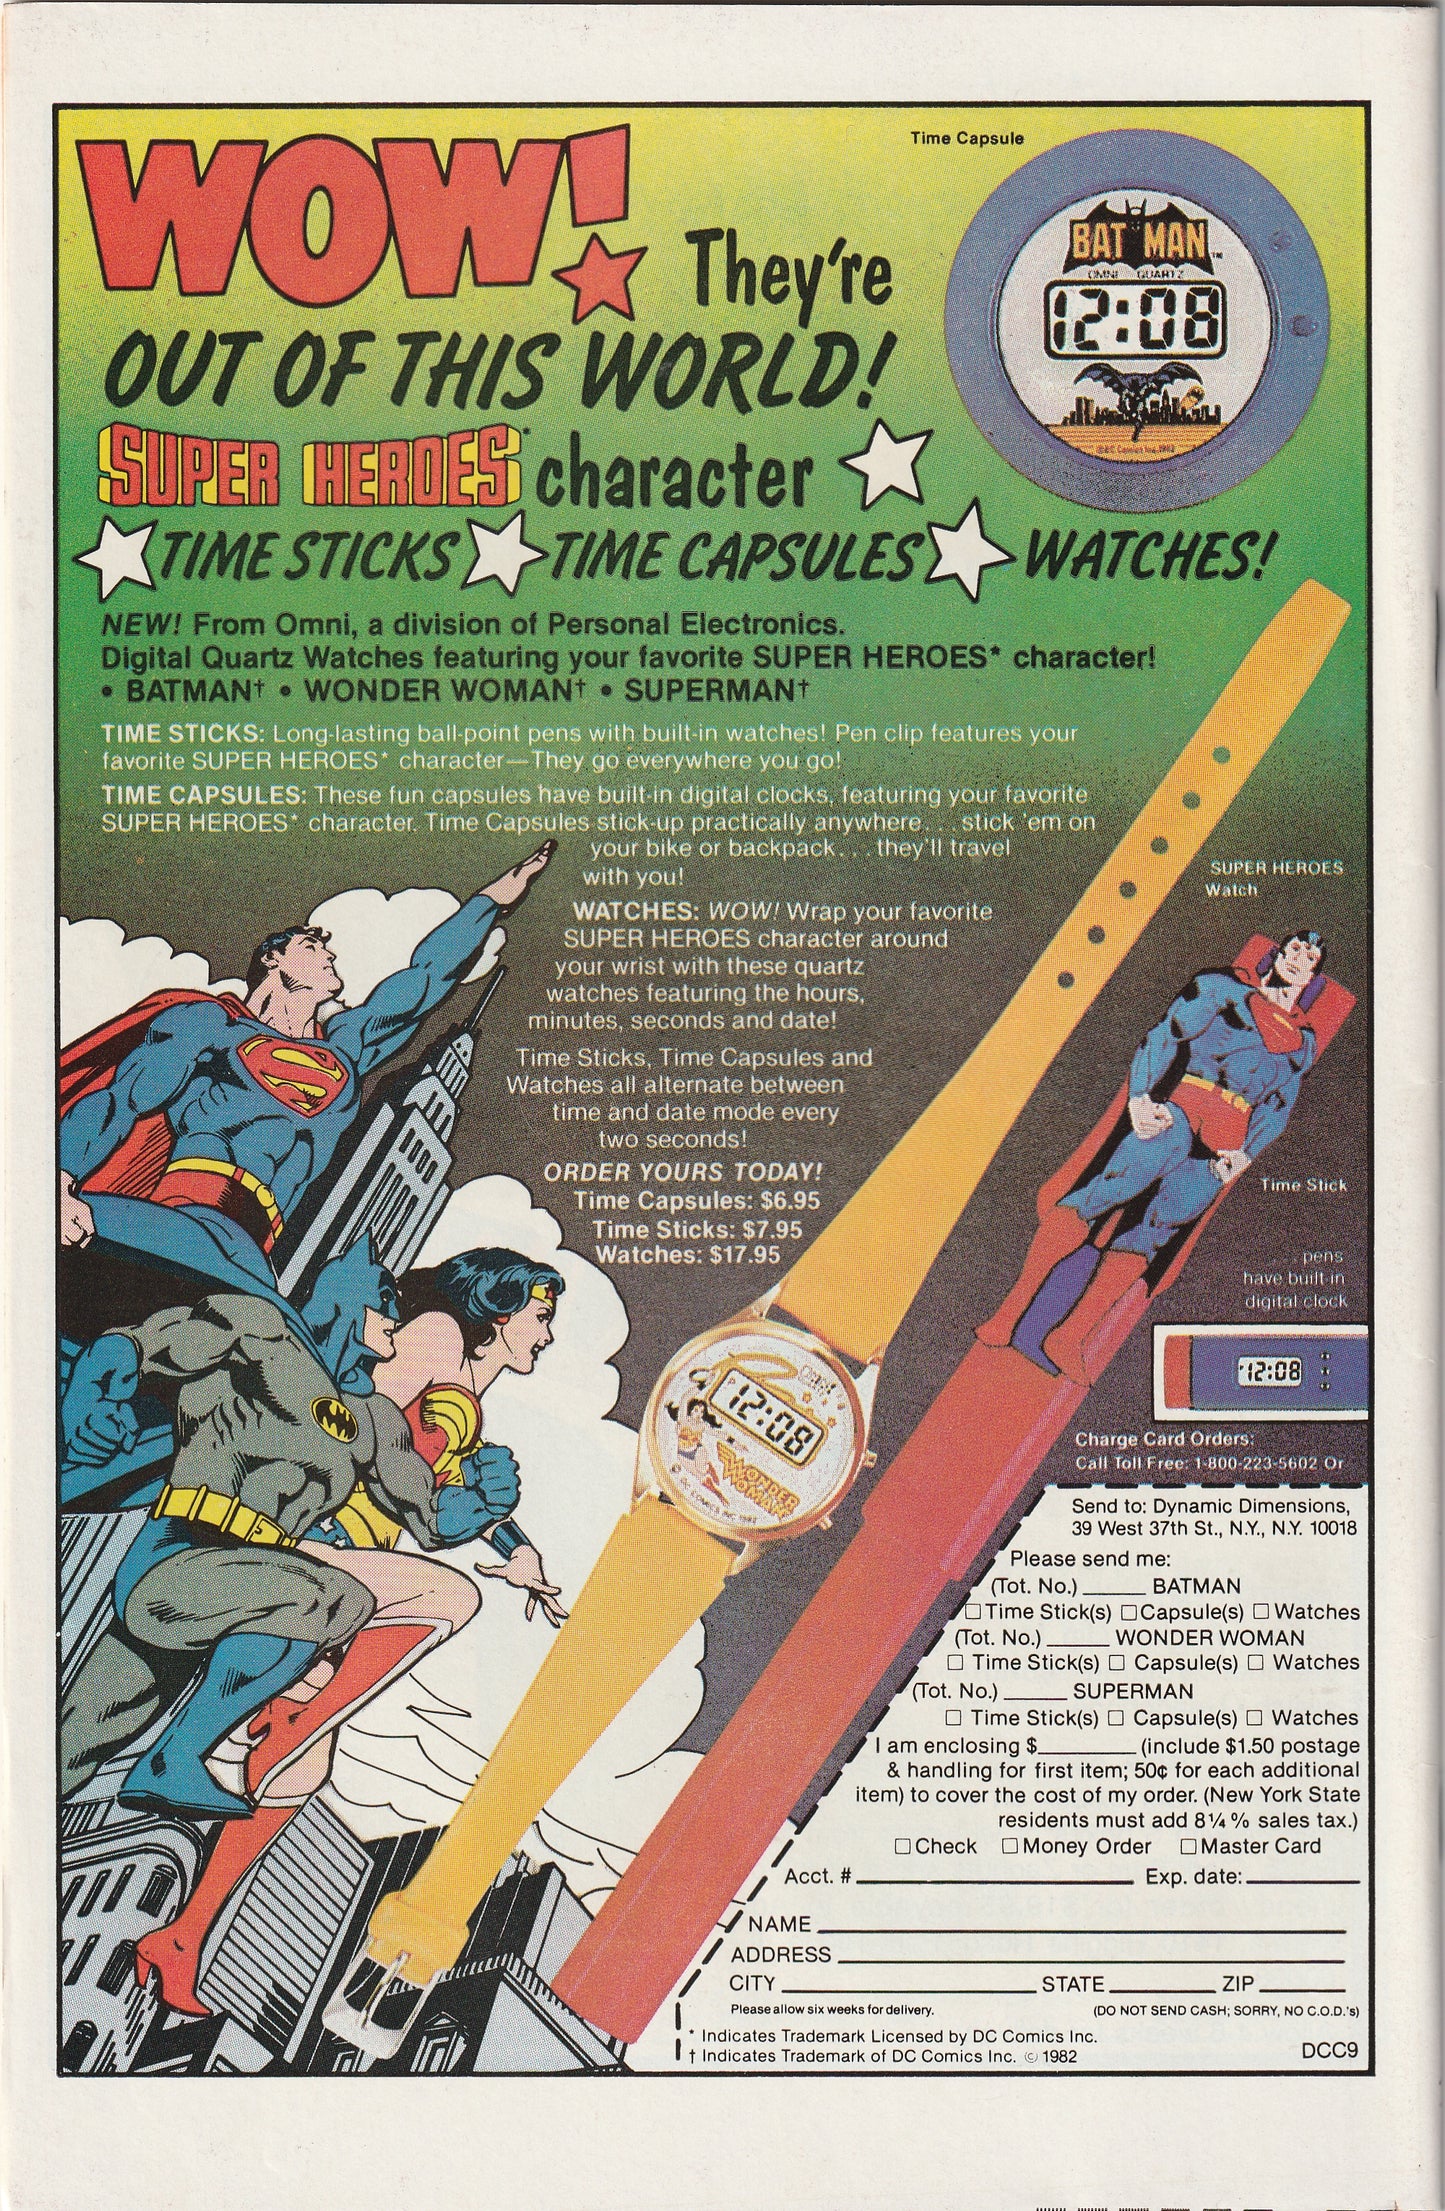 New Adventures of Superboy #36 (1982)